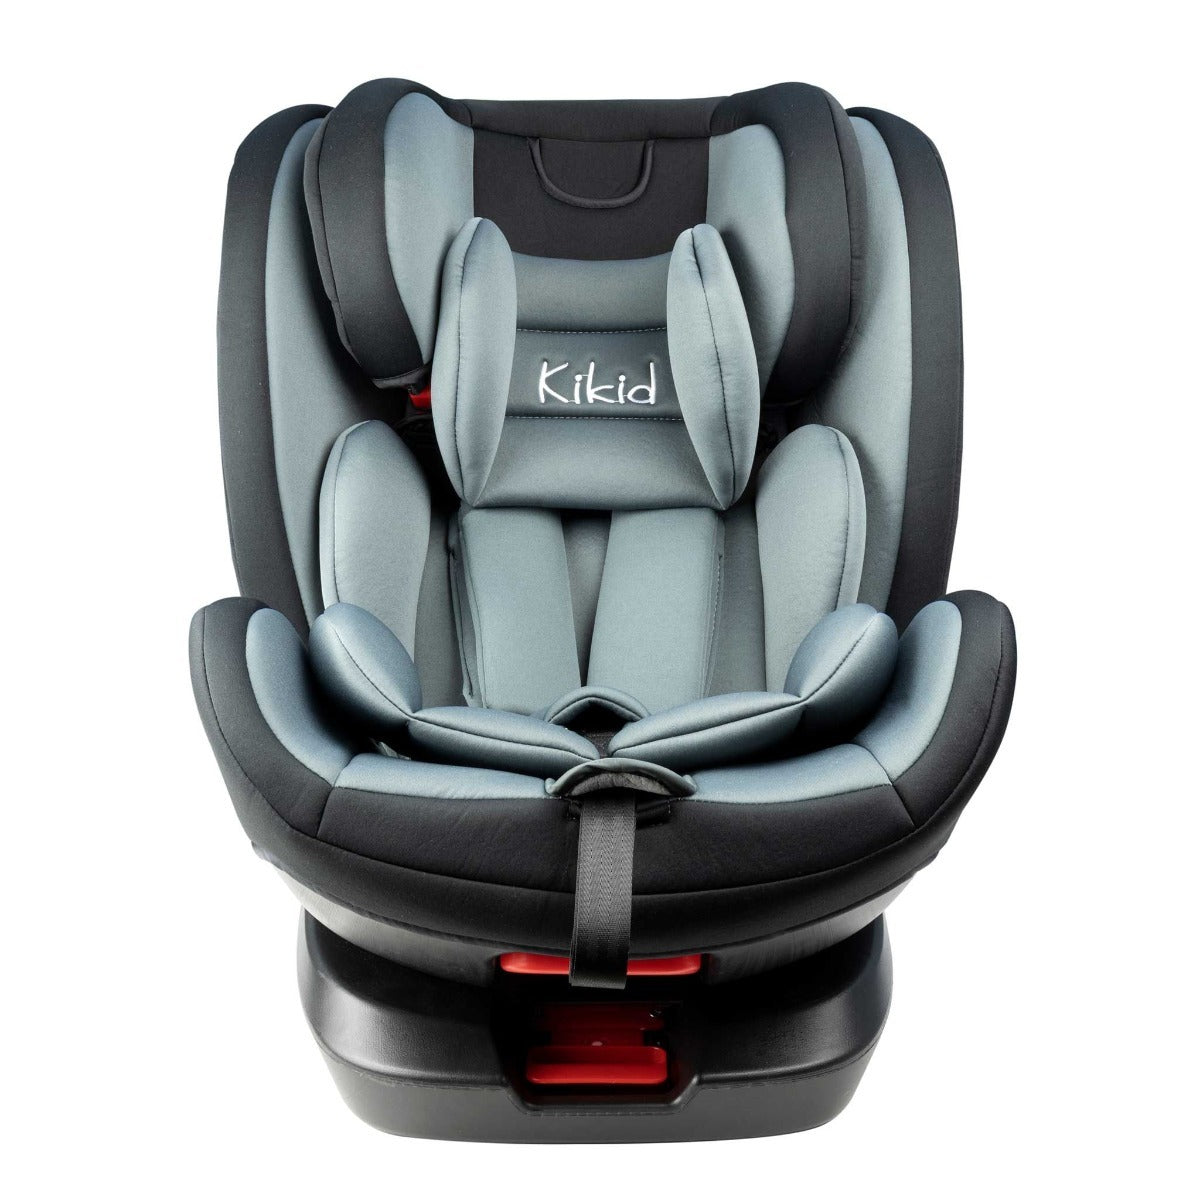 Kikid Kindersitz Premium, ISOFIX, 9-36 kg Black Edition - 169,00 EUR -  Nordic ProStore